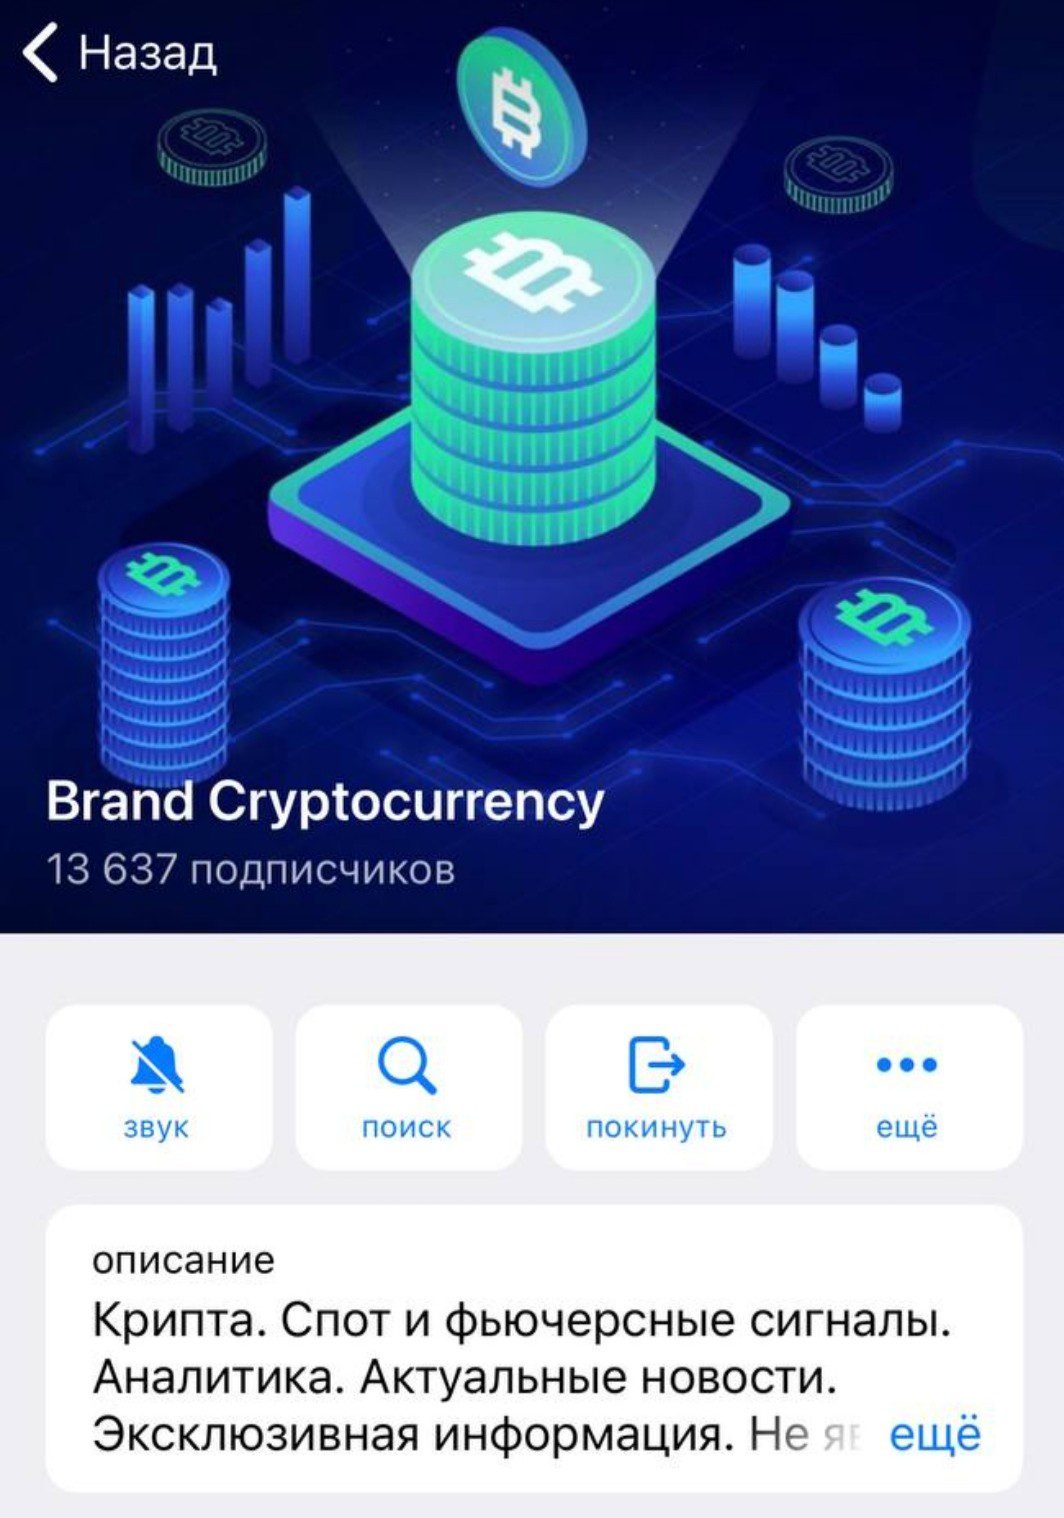 Brand Cryptocurrency телеграм